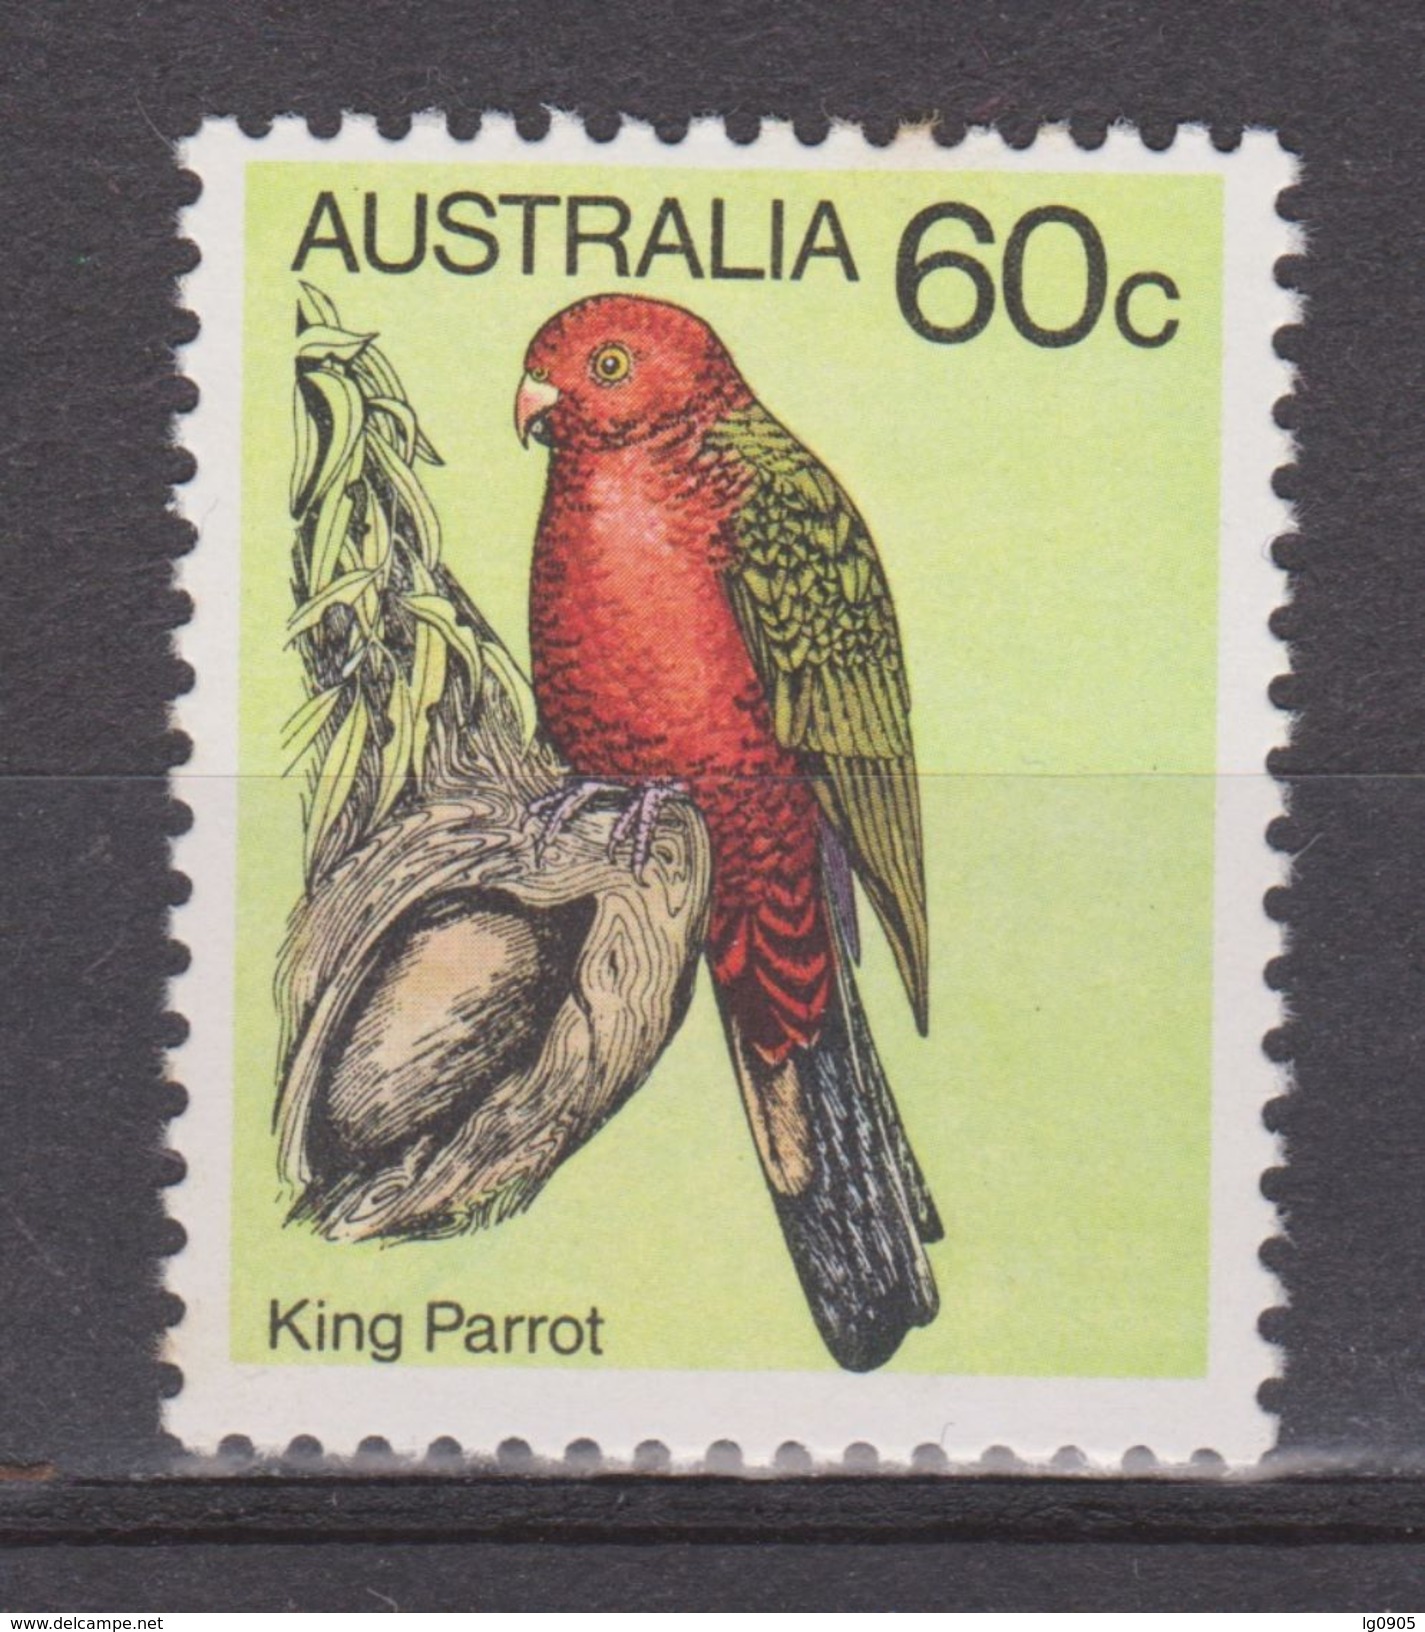 Australie Australia MNH ; Vogel, Oiseau, Ave, Bird, Parod, Parkiet NOW MANY ANIMAL STAMPS FOR SALE - Parrots